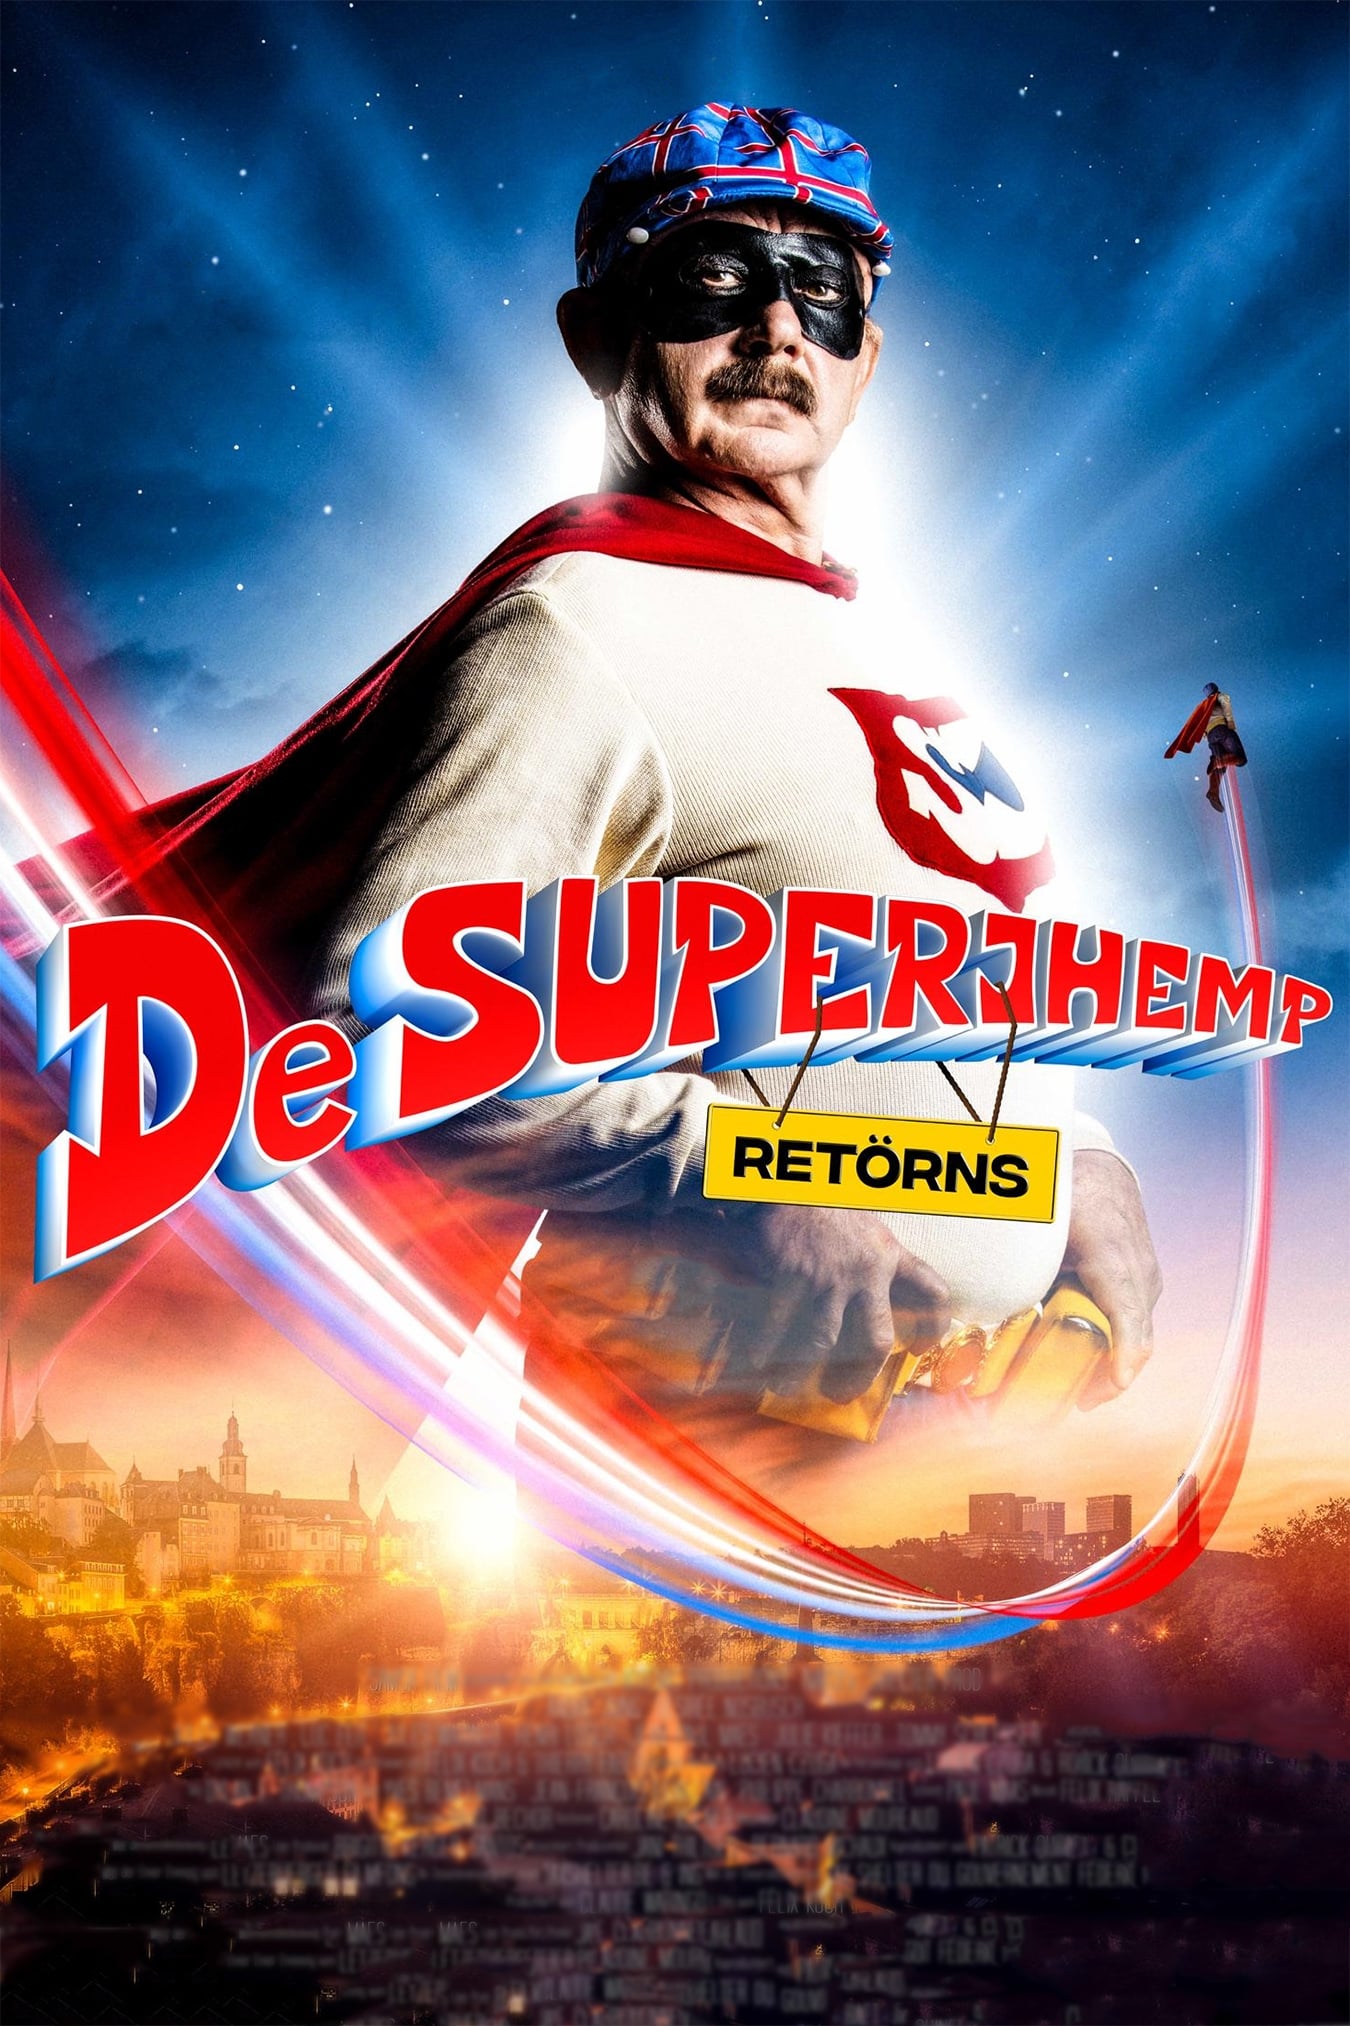 Superchamp Returns on FREECABLE TV